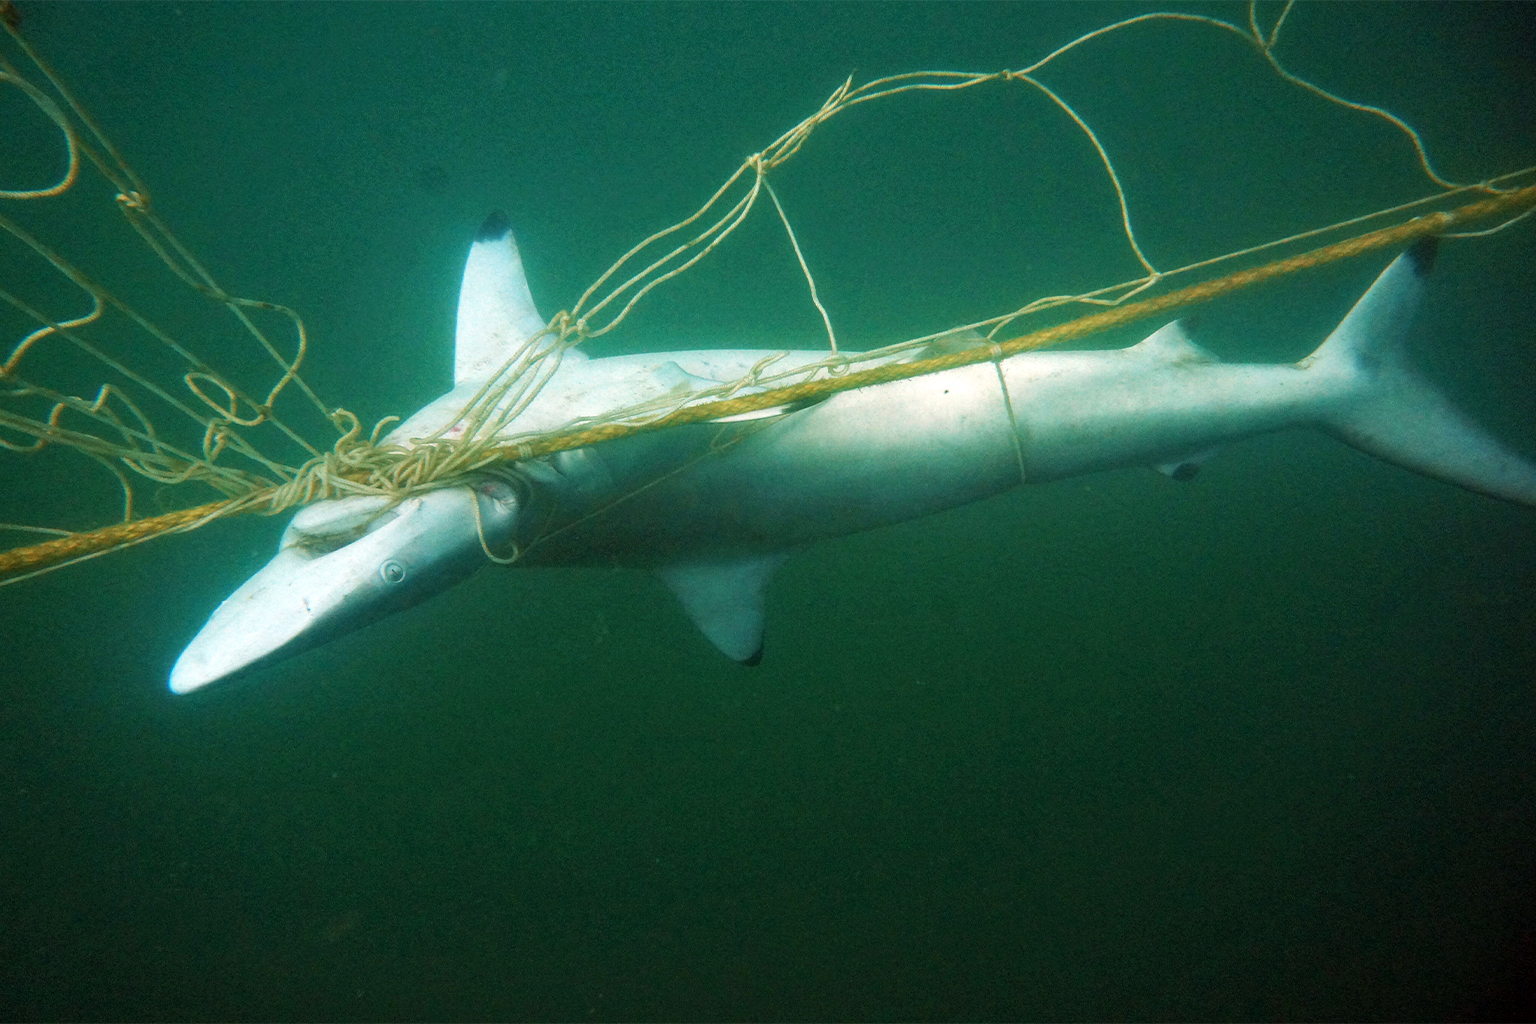 Blacktip shark (Carcharhinus melanopterus) caught in a NSW shark net.